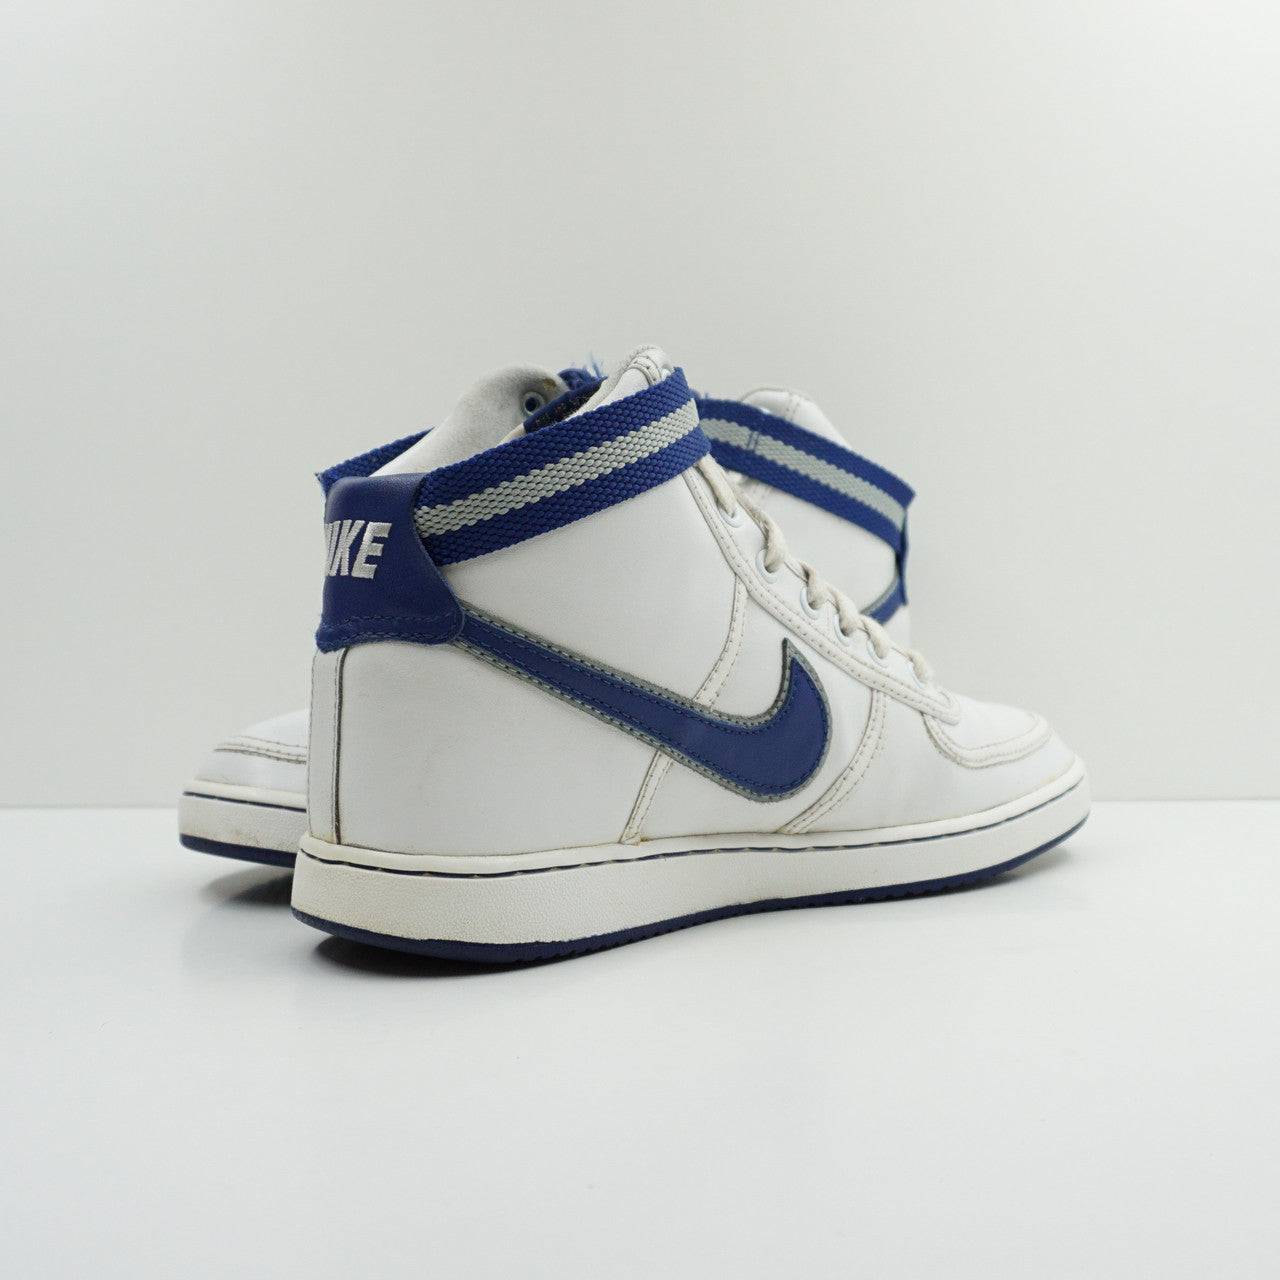 Nike Vandal High Leather White/Blue